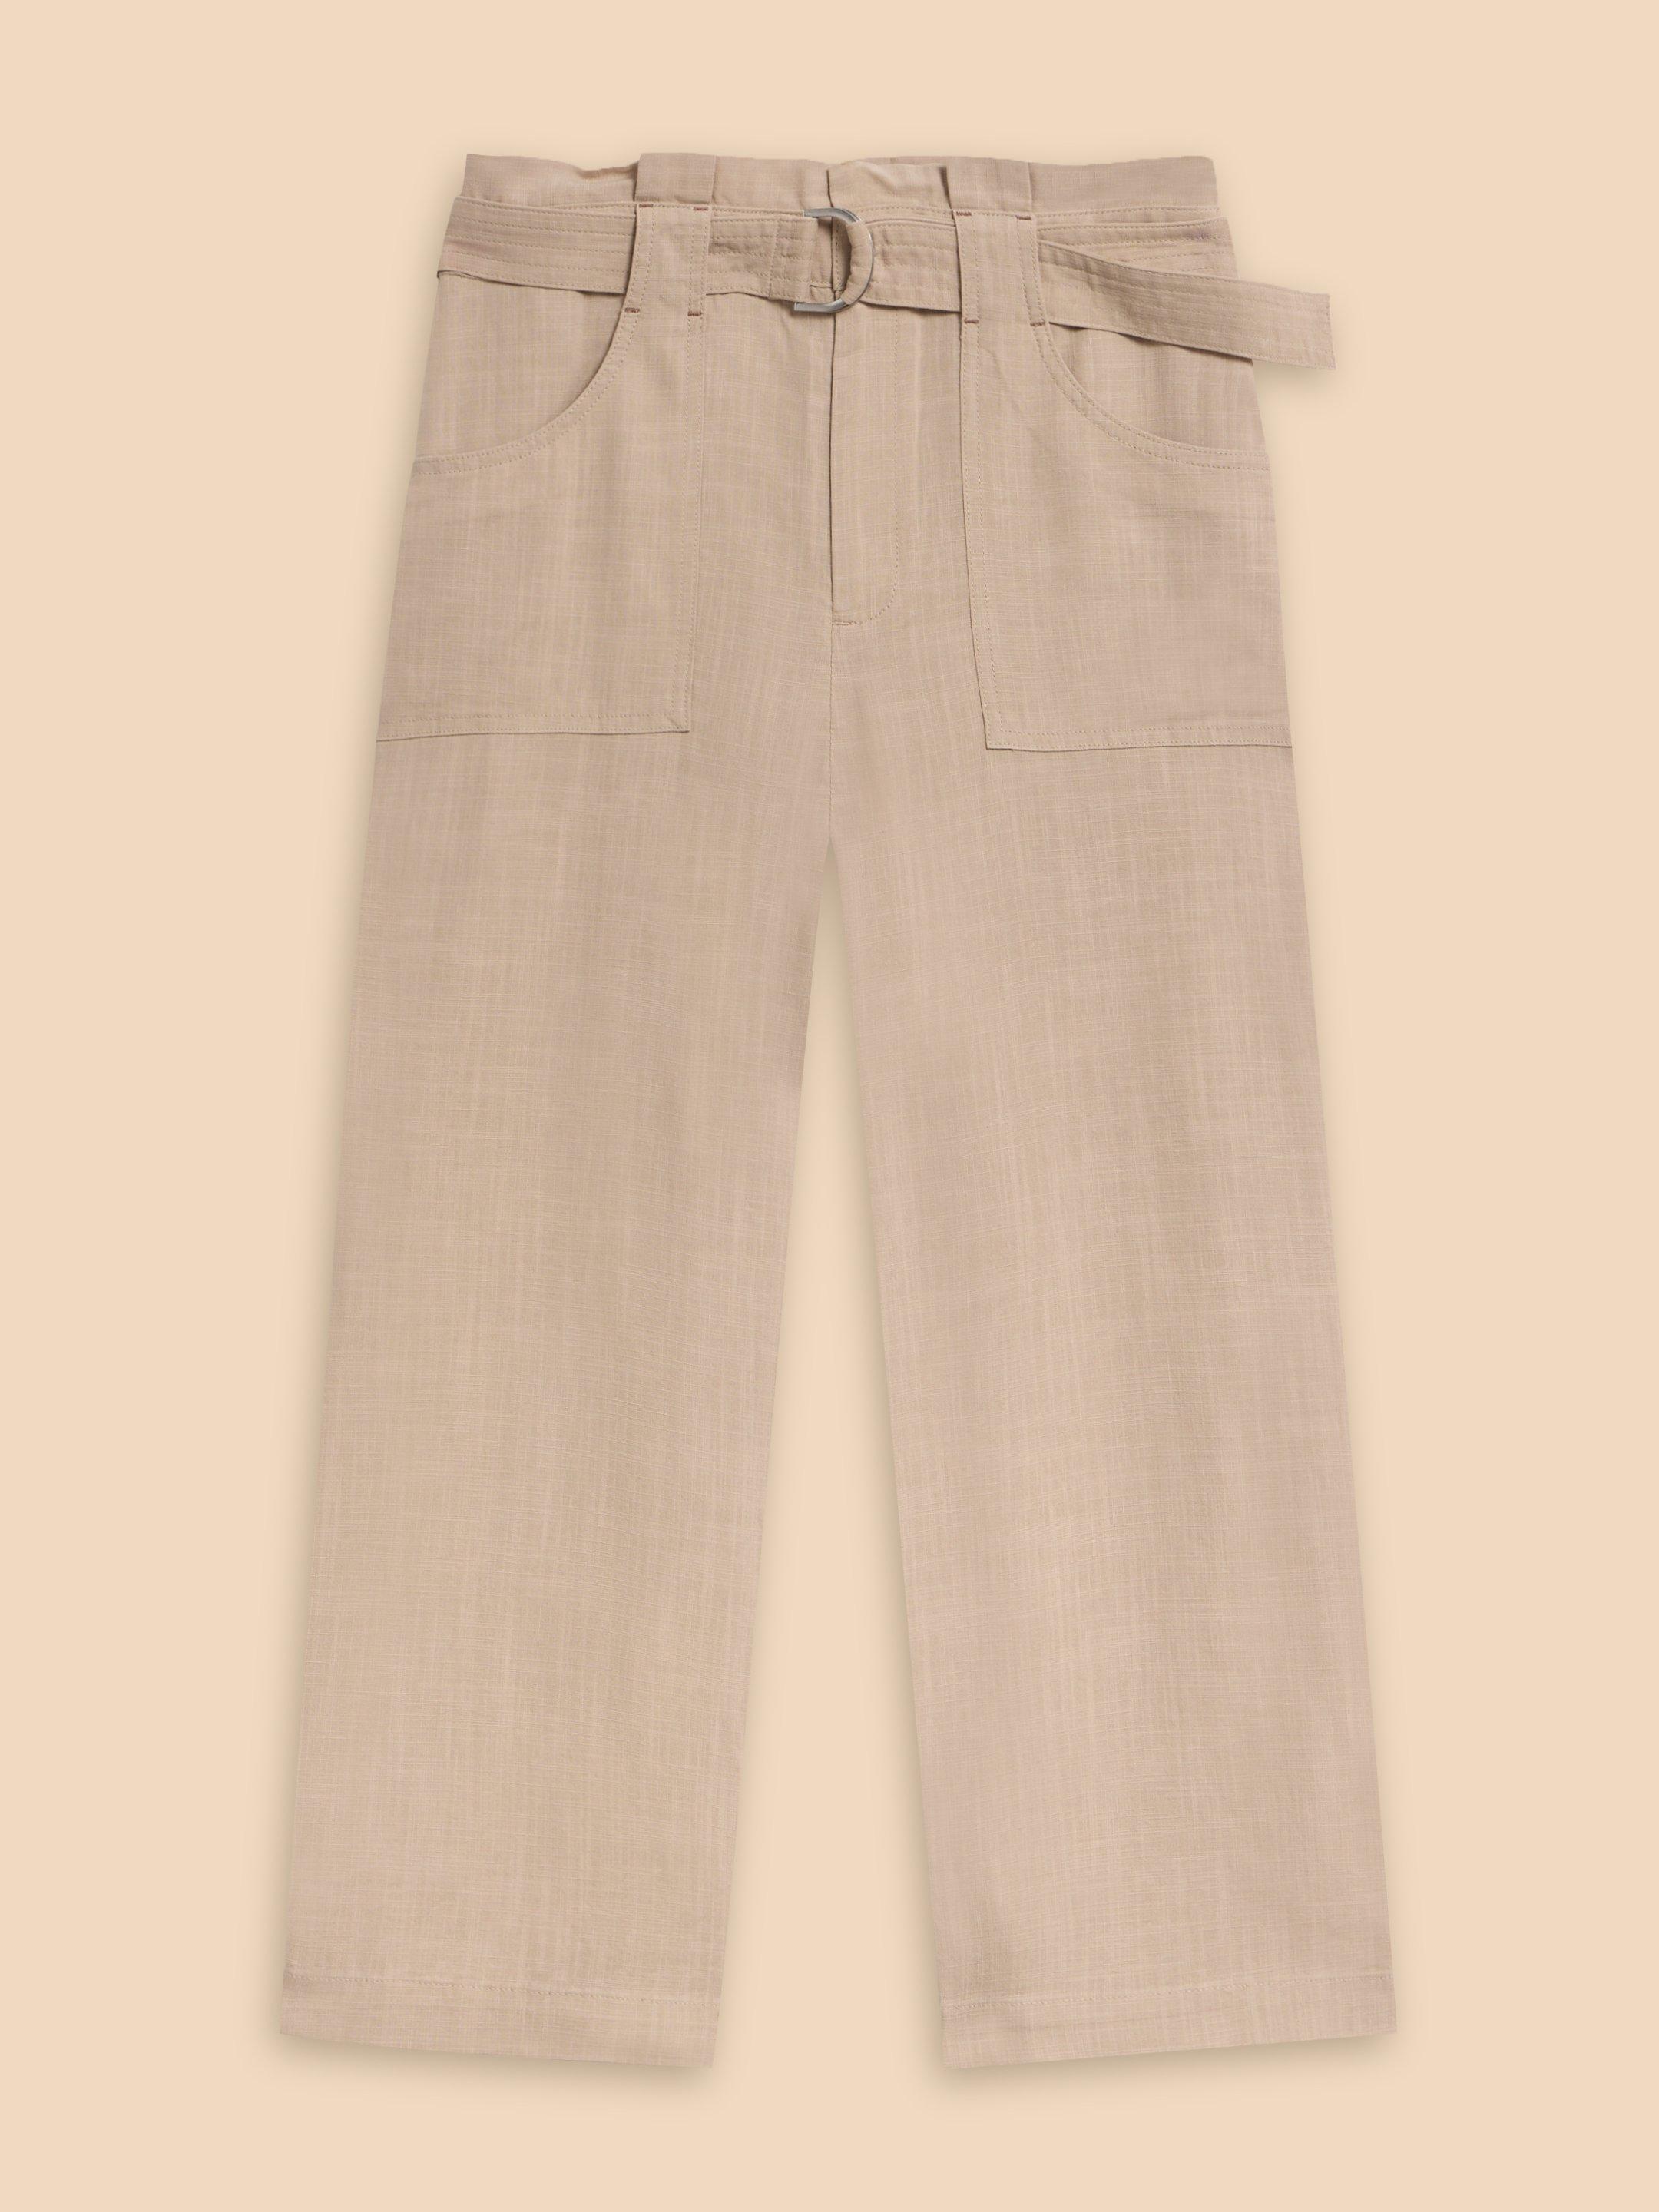 Teakie Tencel Linen Trouser in LGT NAT - FLAT FRONT